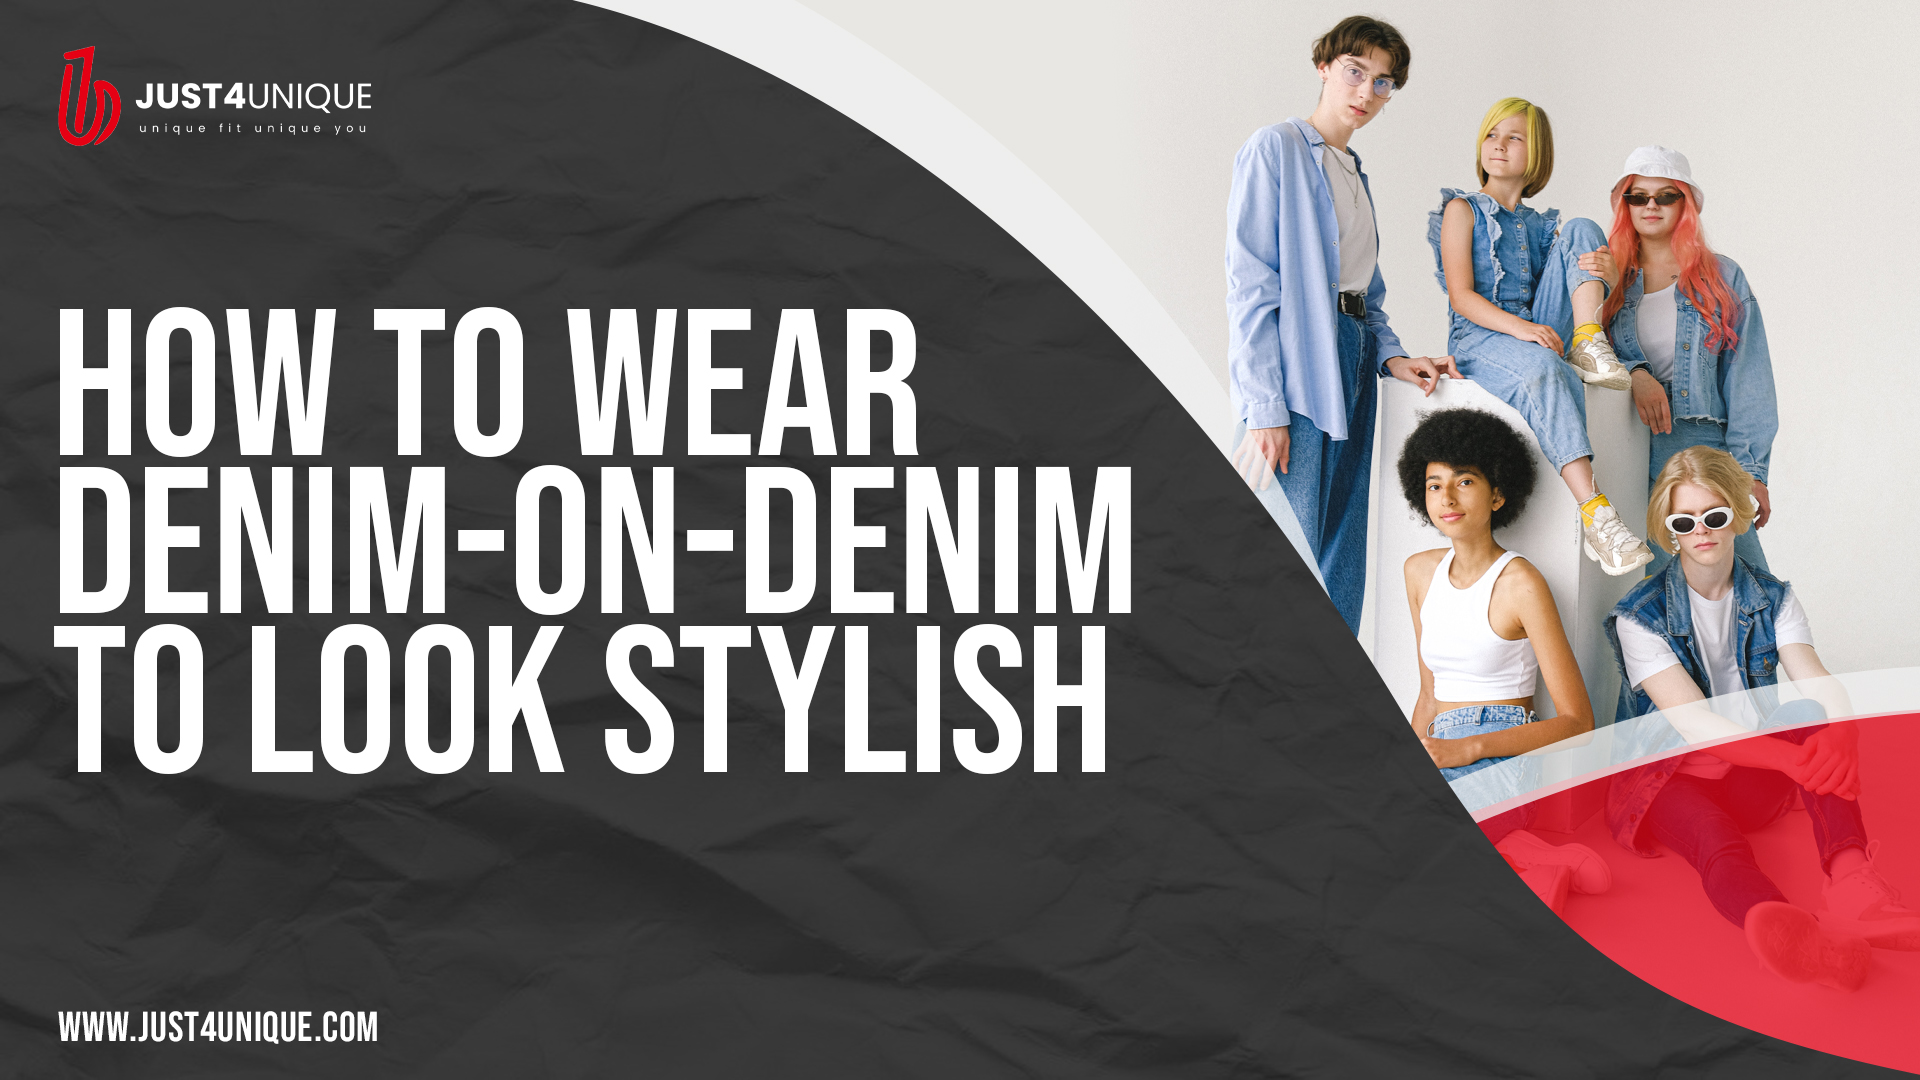 how to wear bespoke denim look stylish